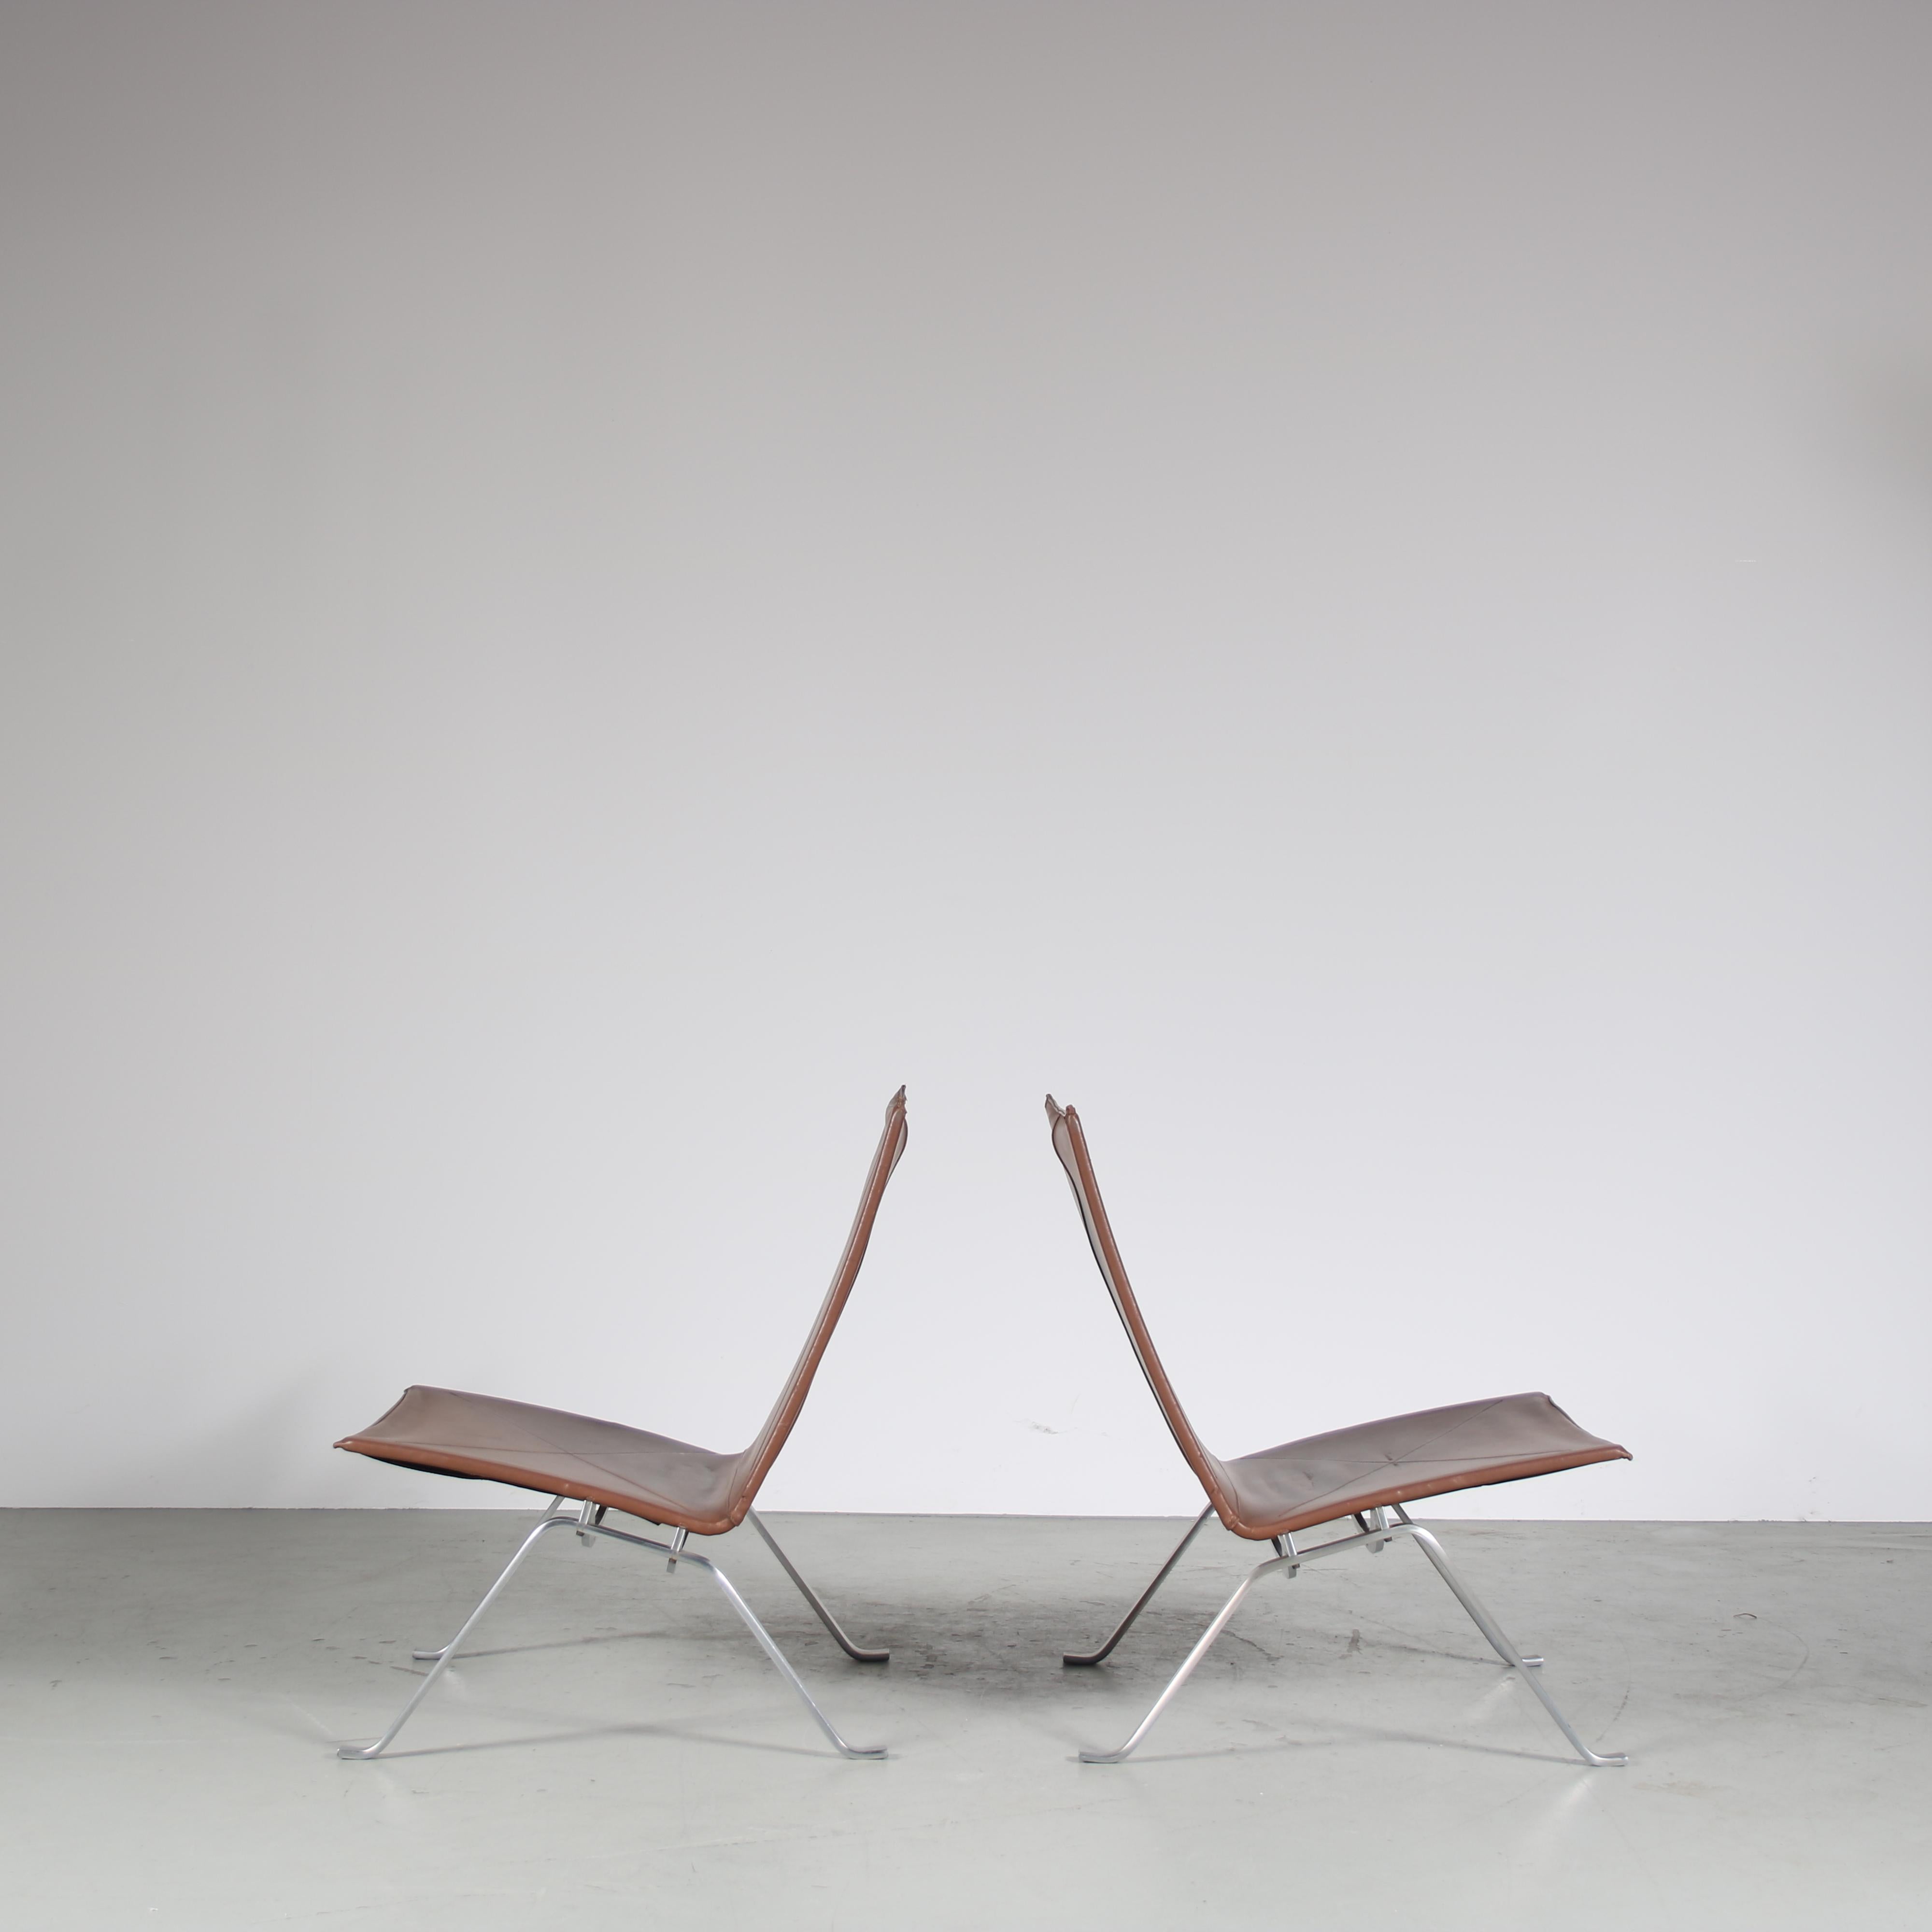 Late 20th Century Pair of PK22 Chairs by Poul Kjaerholm for Fritz Hansen, Denmark 1980